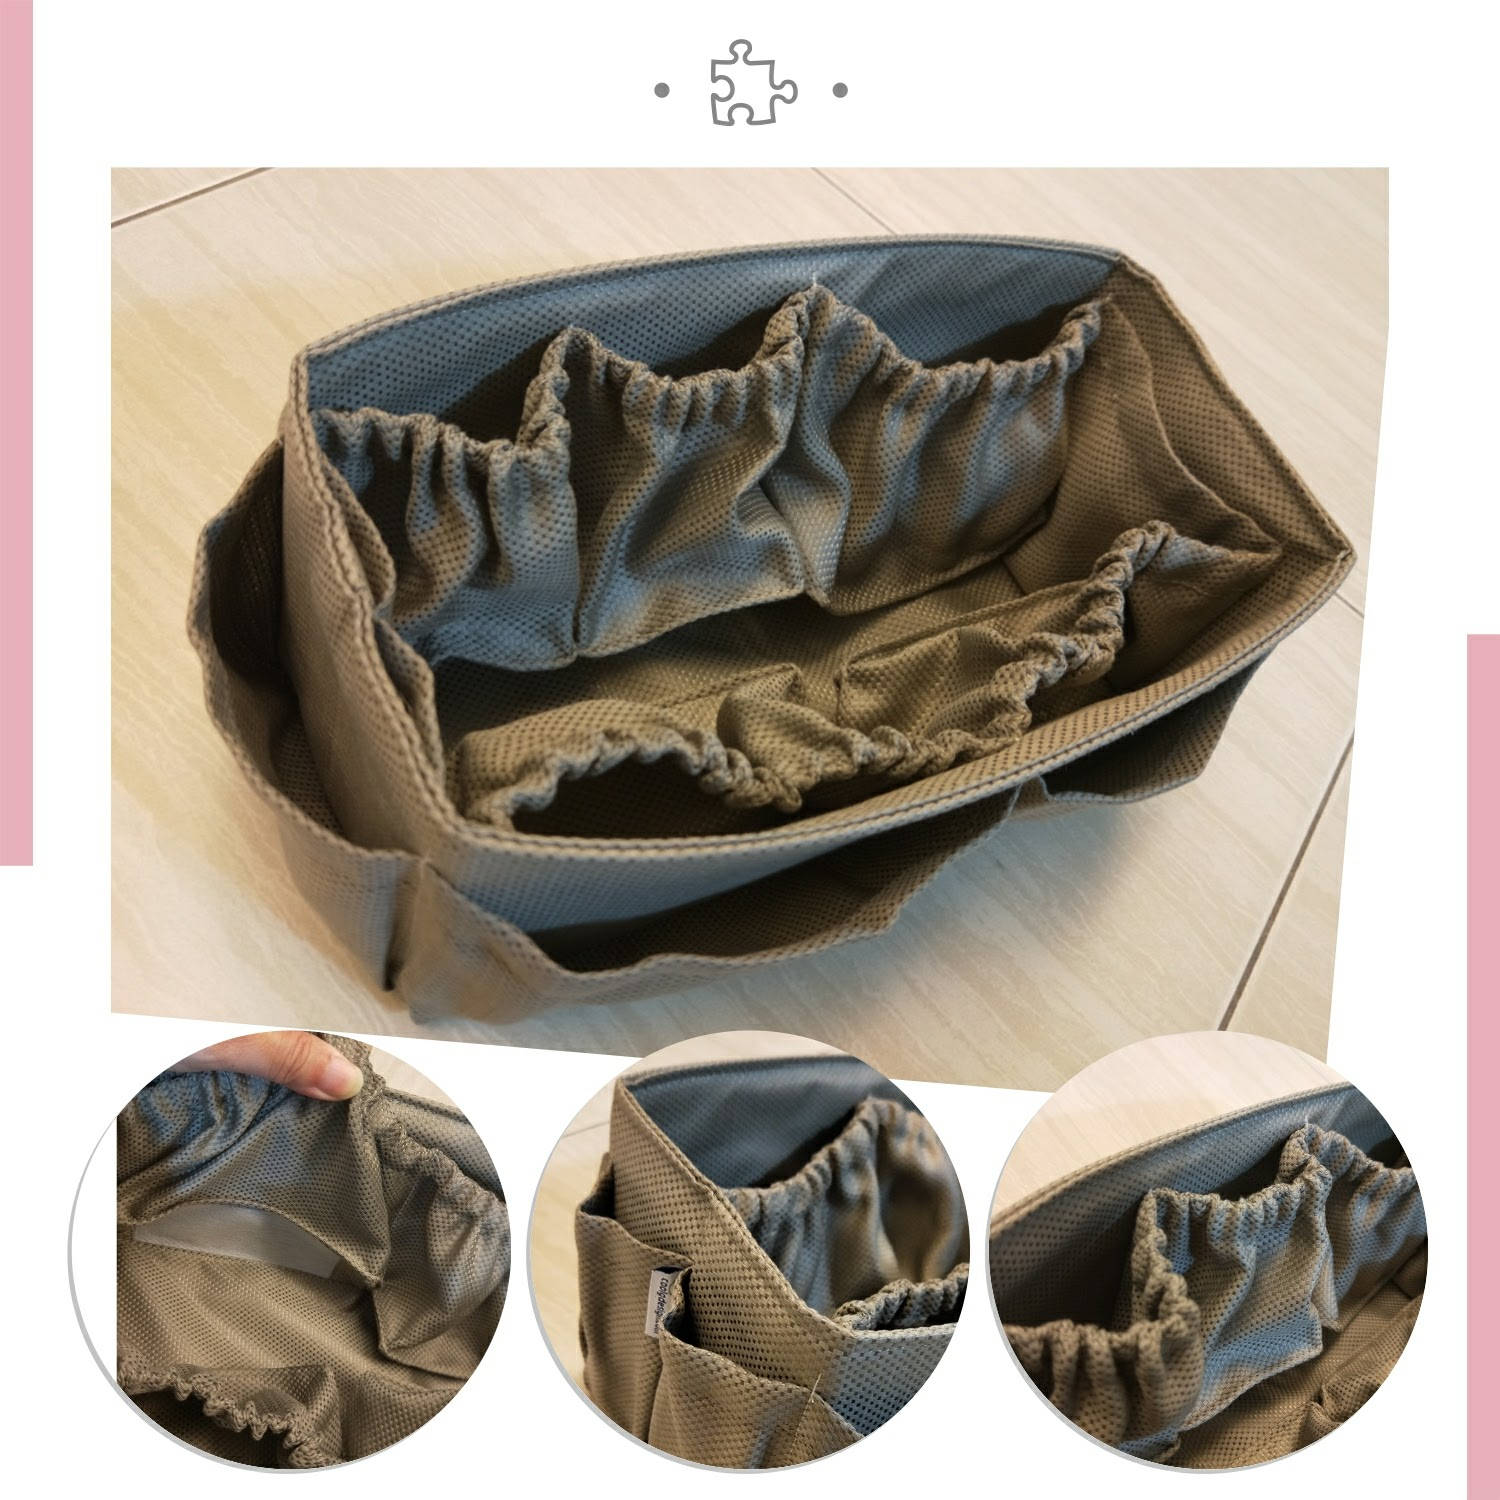 Louis Vuitton Neverfull Diaper Bag